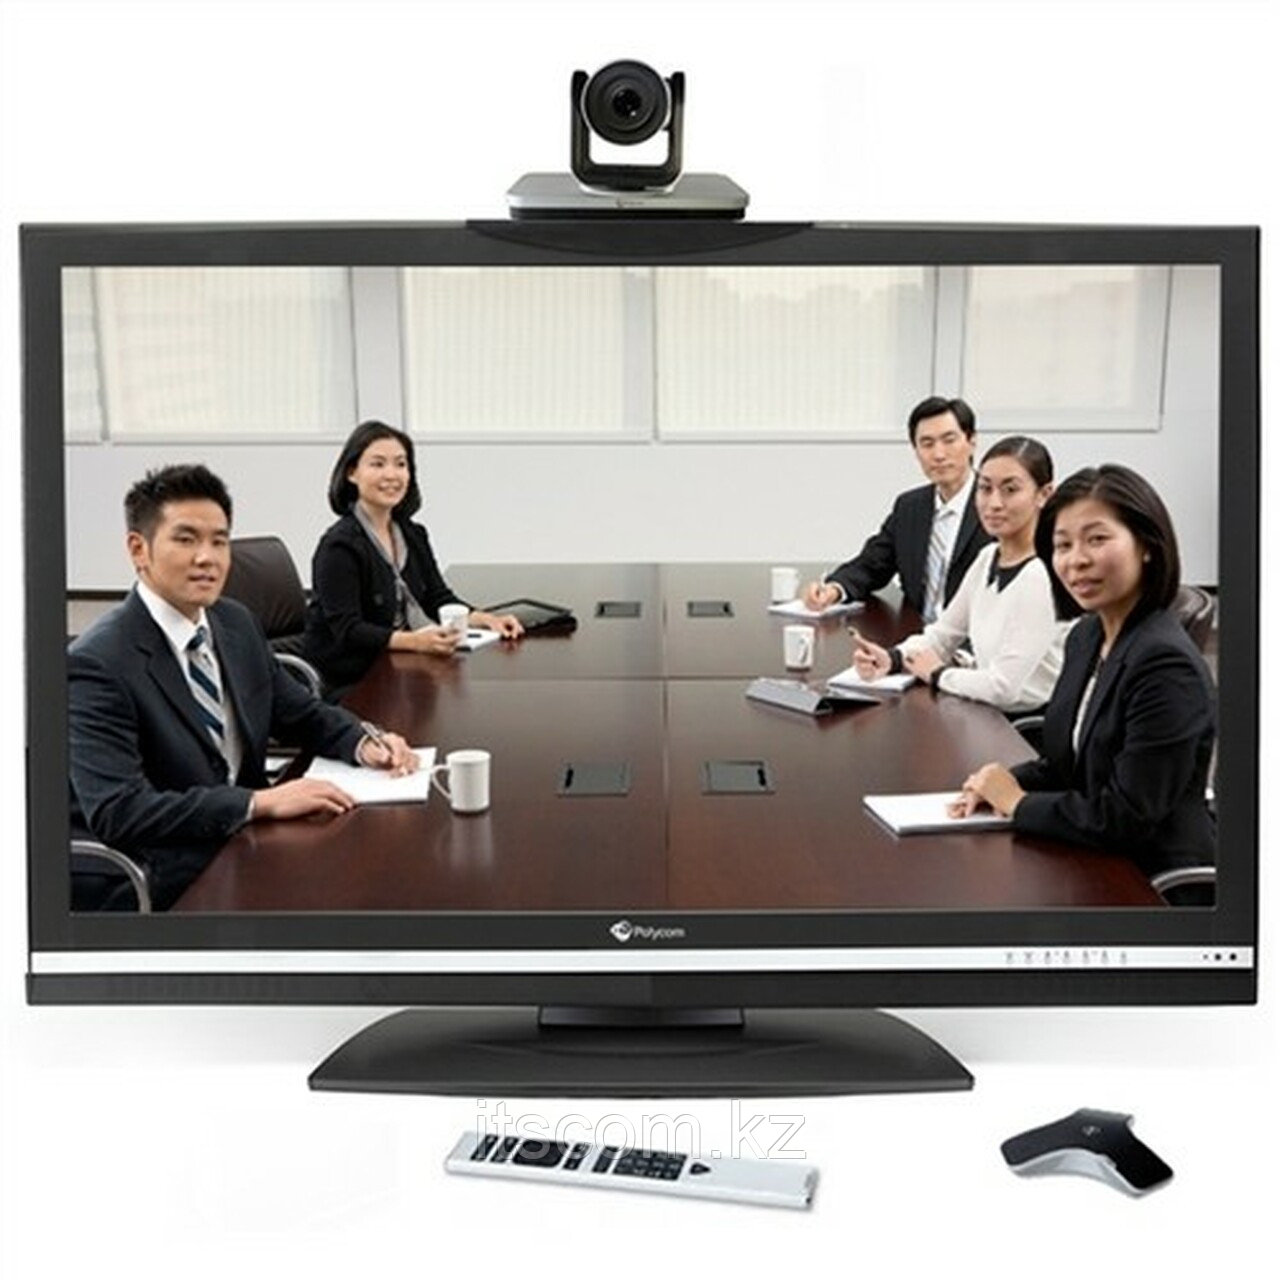 Система видеоконференцсвязи Polycom Group 500-720 Tabletop Media Center 1TT42 (7200-67259-114)